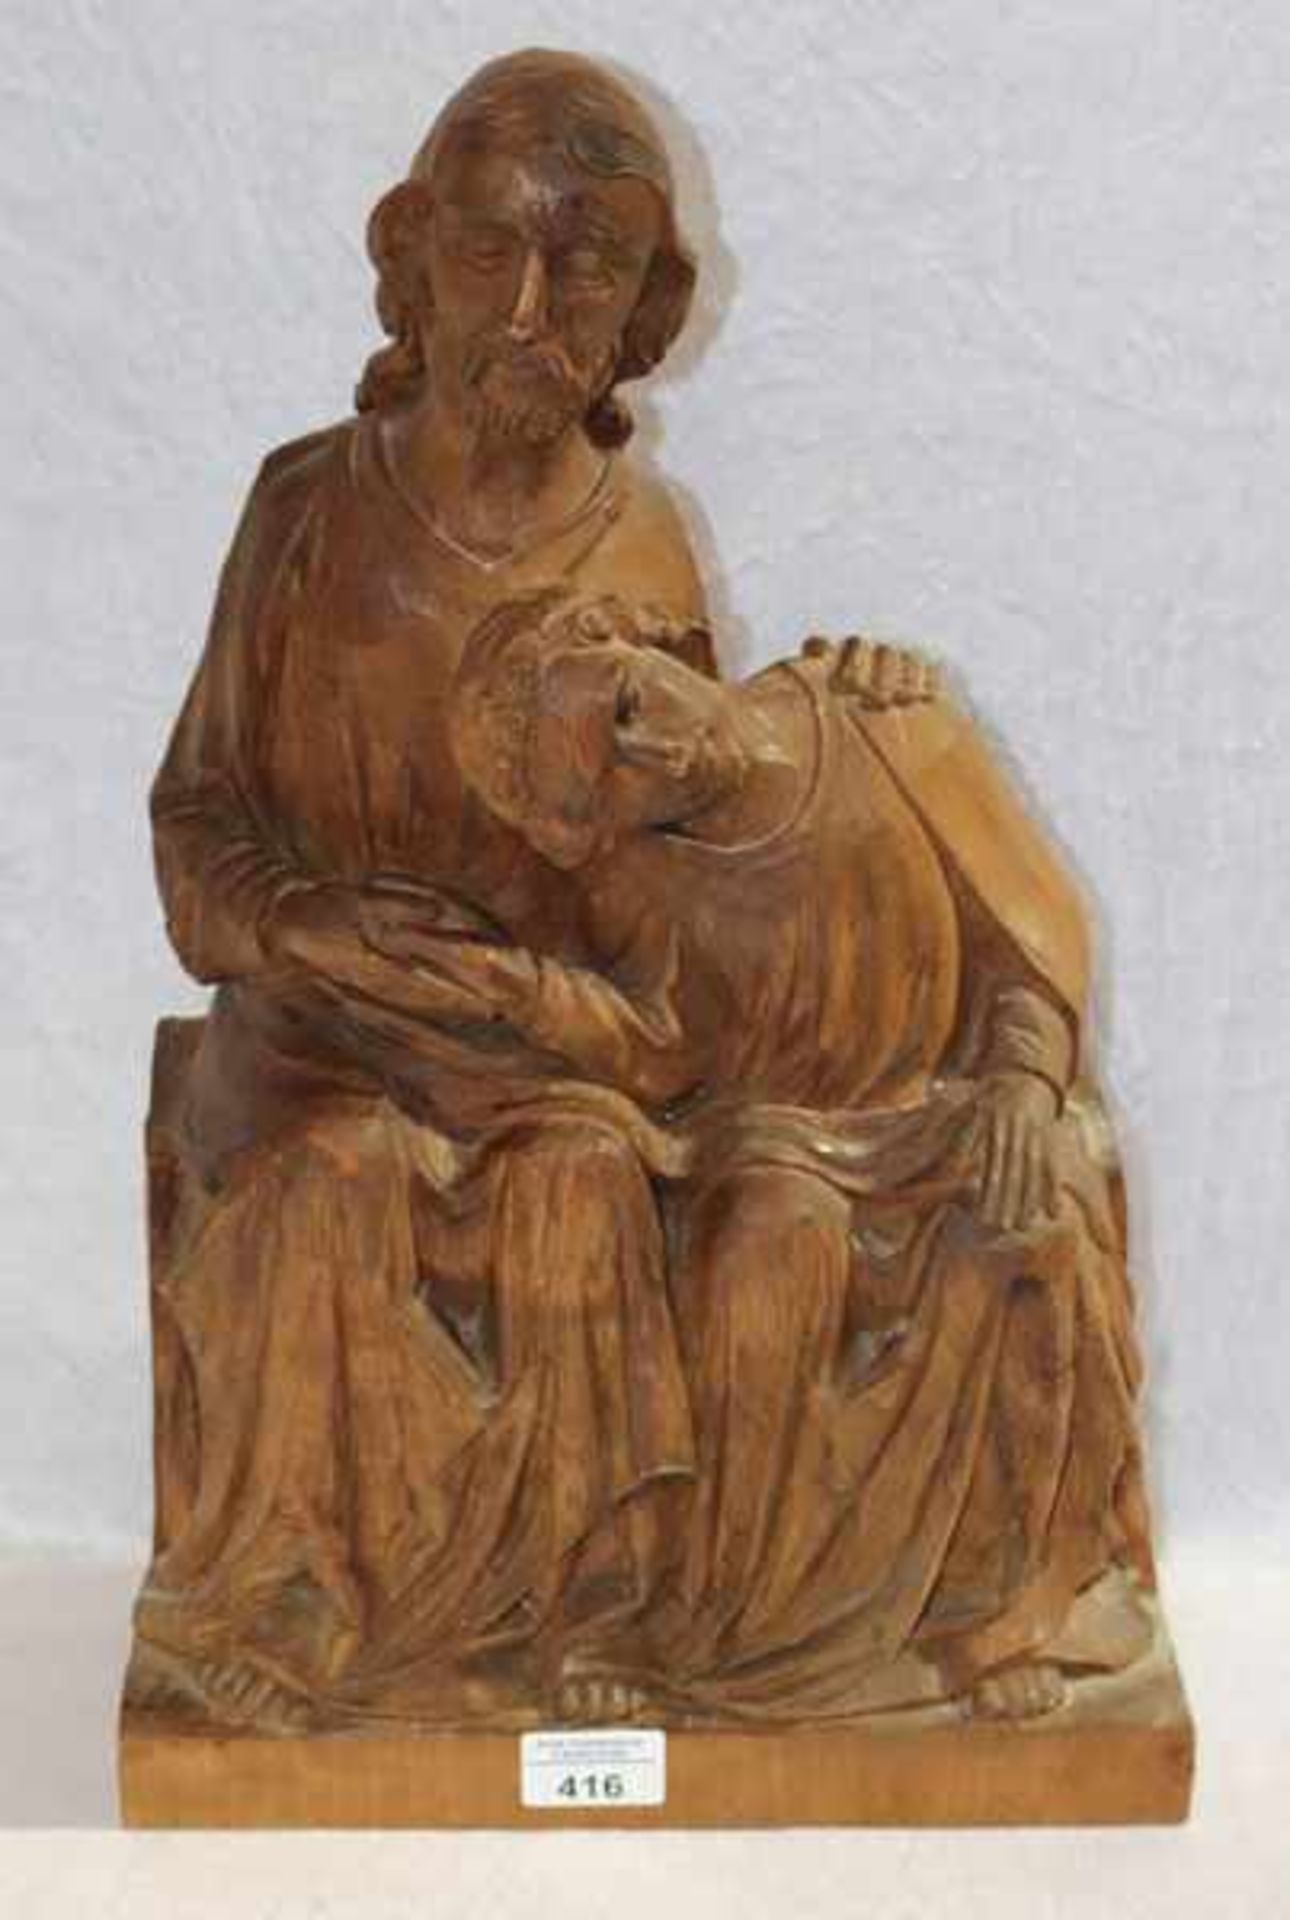 Holz Figurenskulptur 'Religiöse Darstellung', dunkel gebeizt, H 48 cm, B 29 cm, T 14 cm